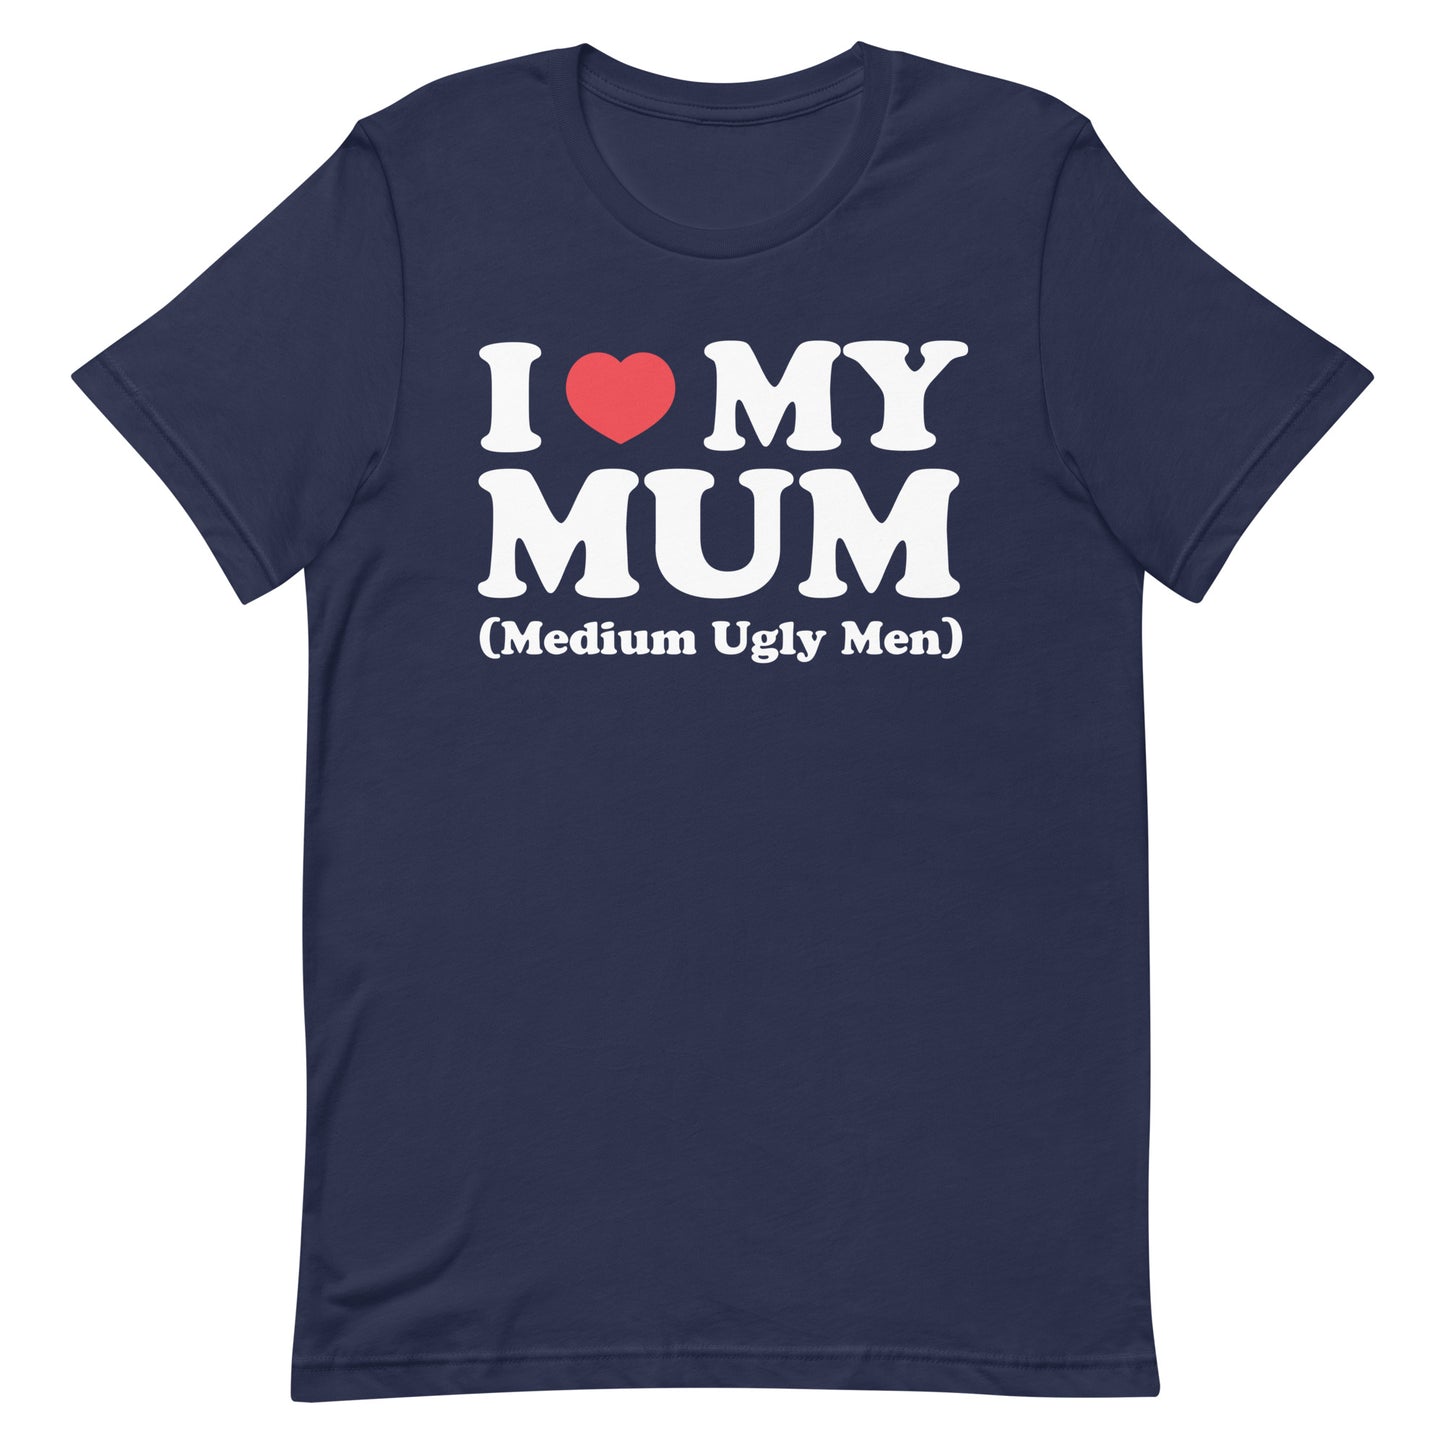 I Heart My Mum (Medium Ugly Men) Unisex t-shirt